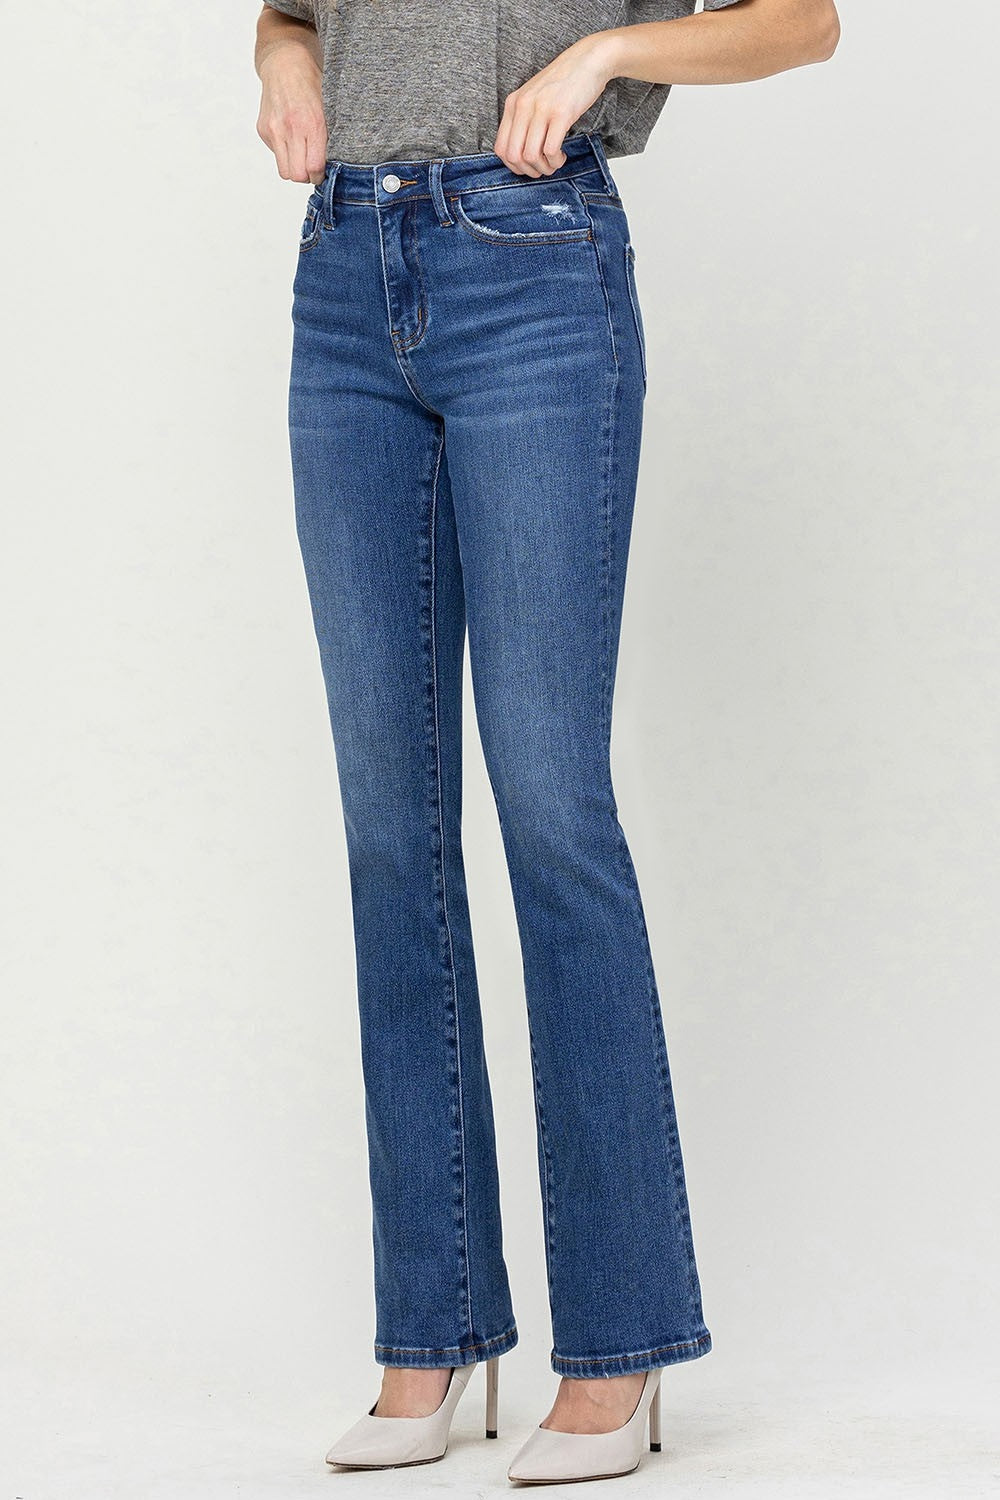 KESLEY  High Waist Bootcut Jeans Premium Luxury Cotton Denim Pants